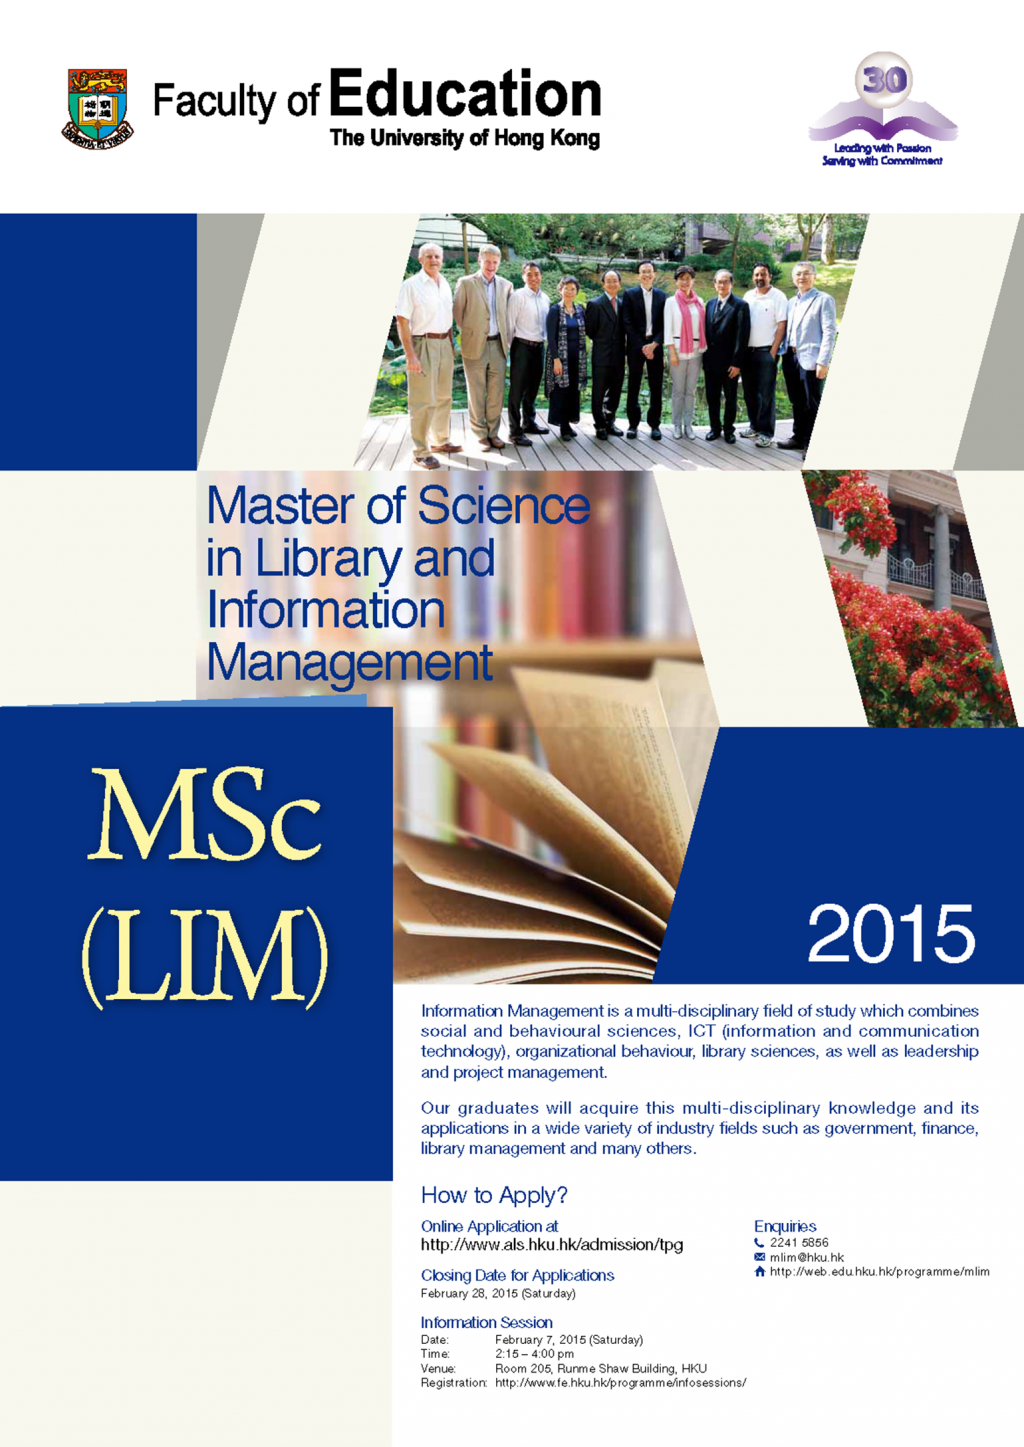 Information Session of MSc(LIM)